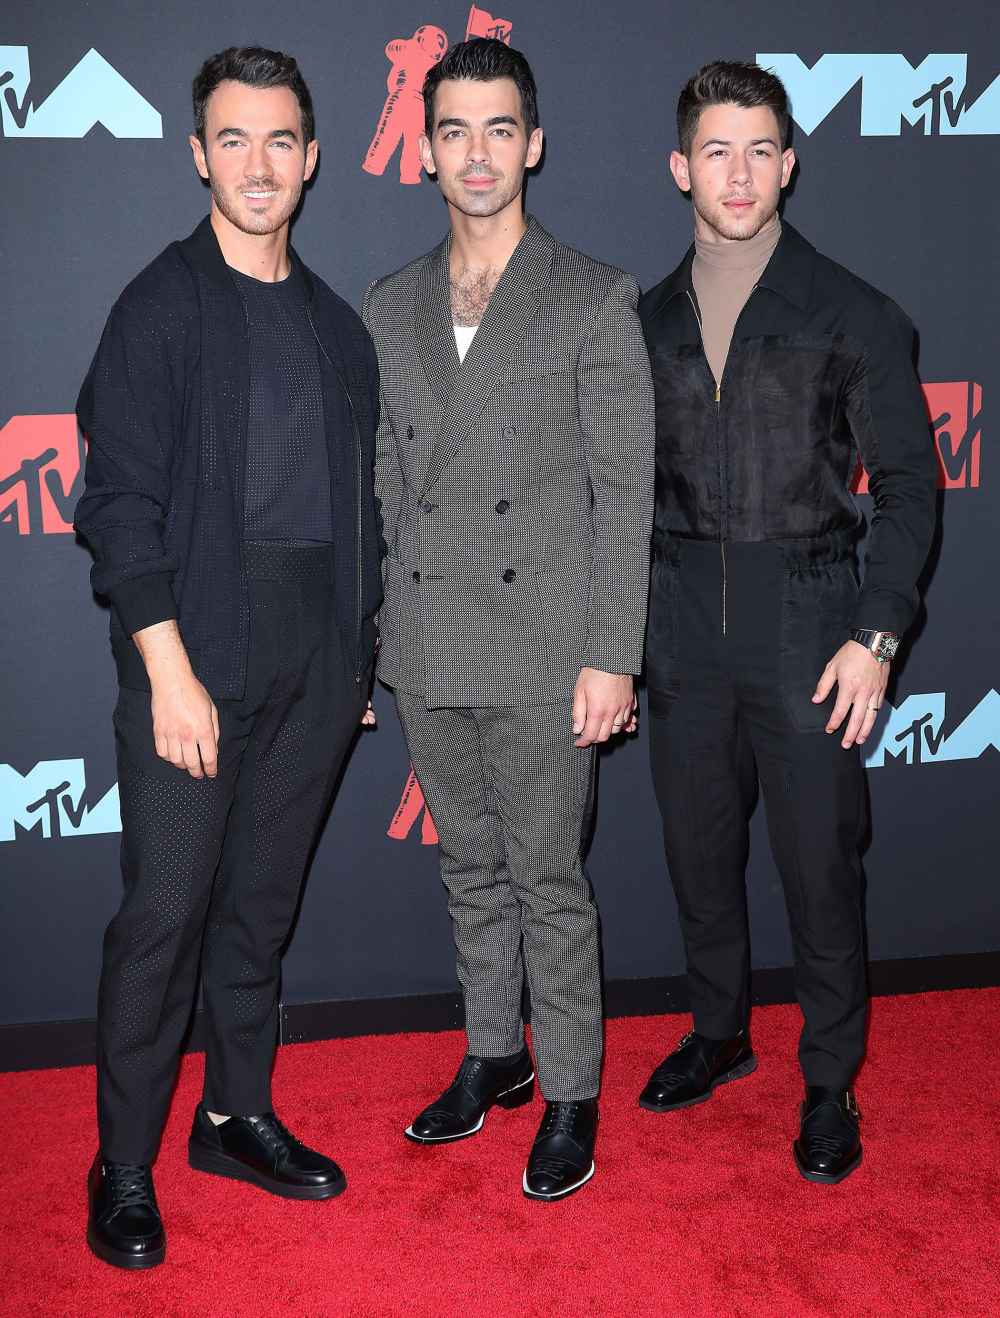 Hottest Hunks VMAS 2019 - The Jonas Brothers